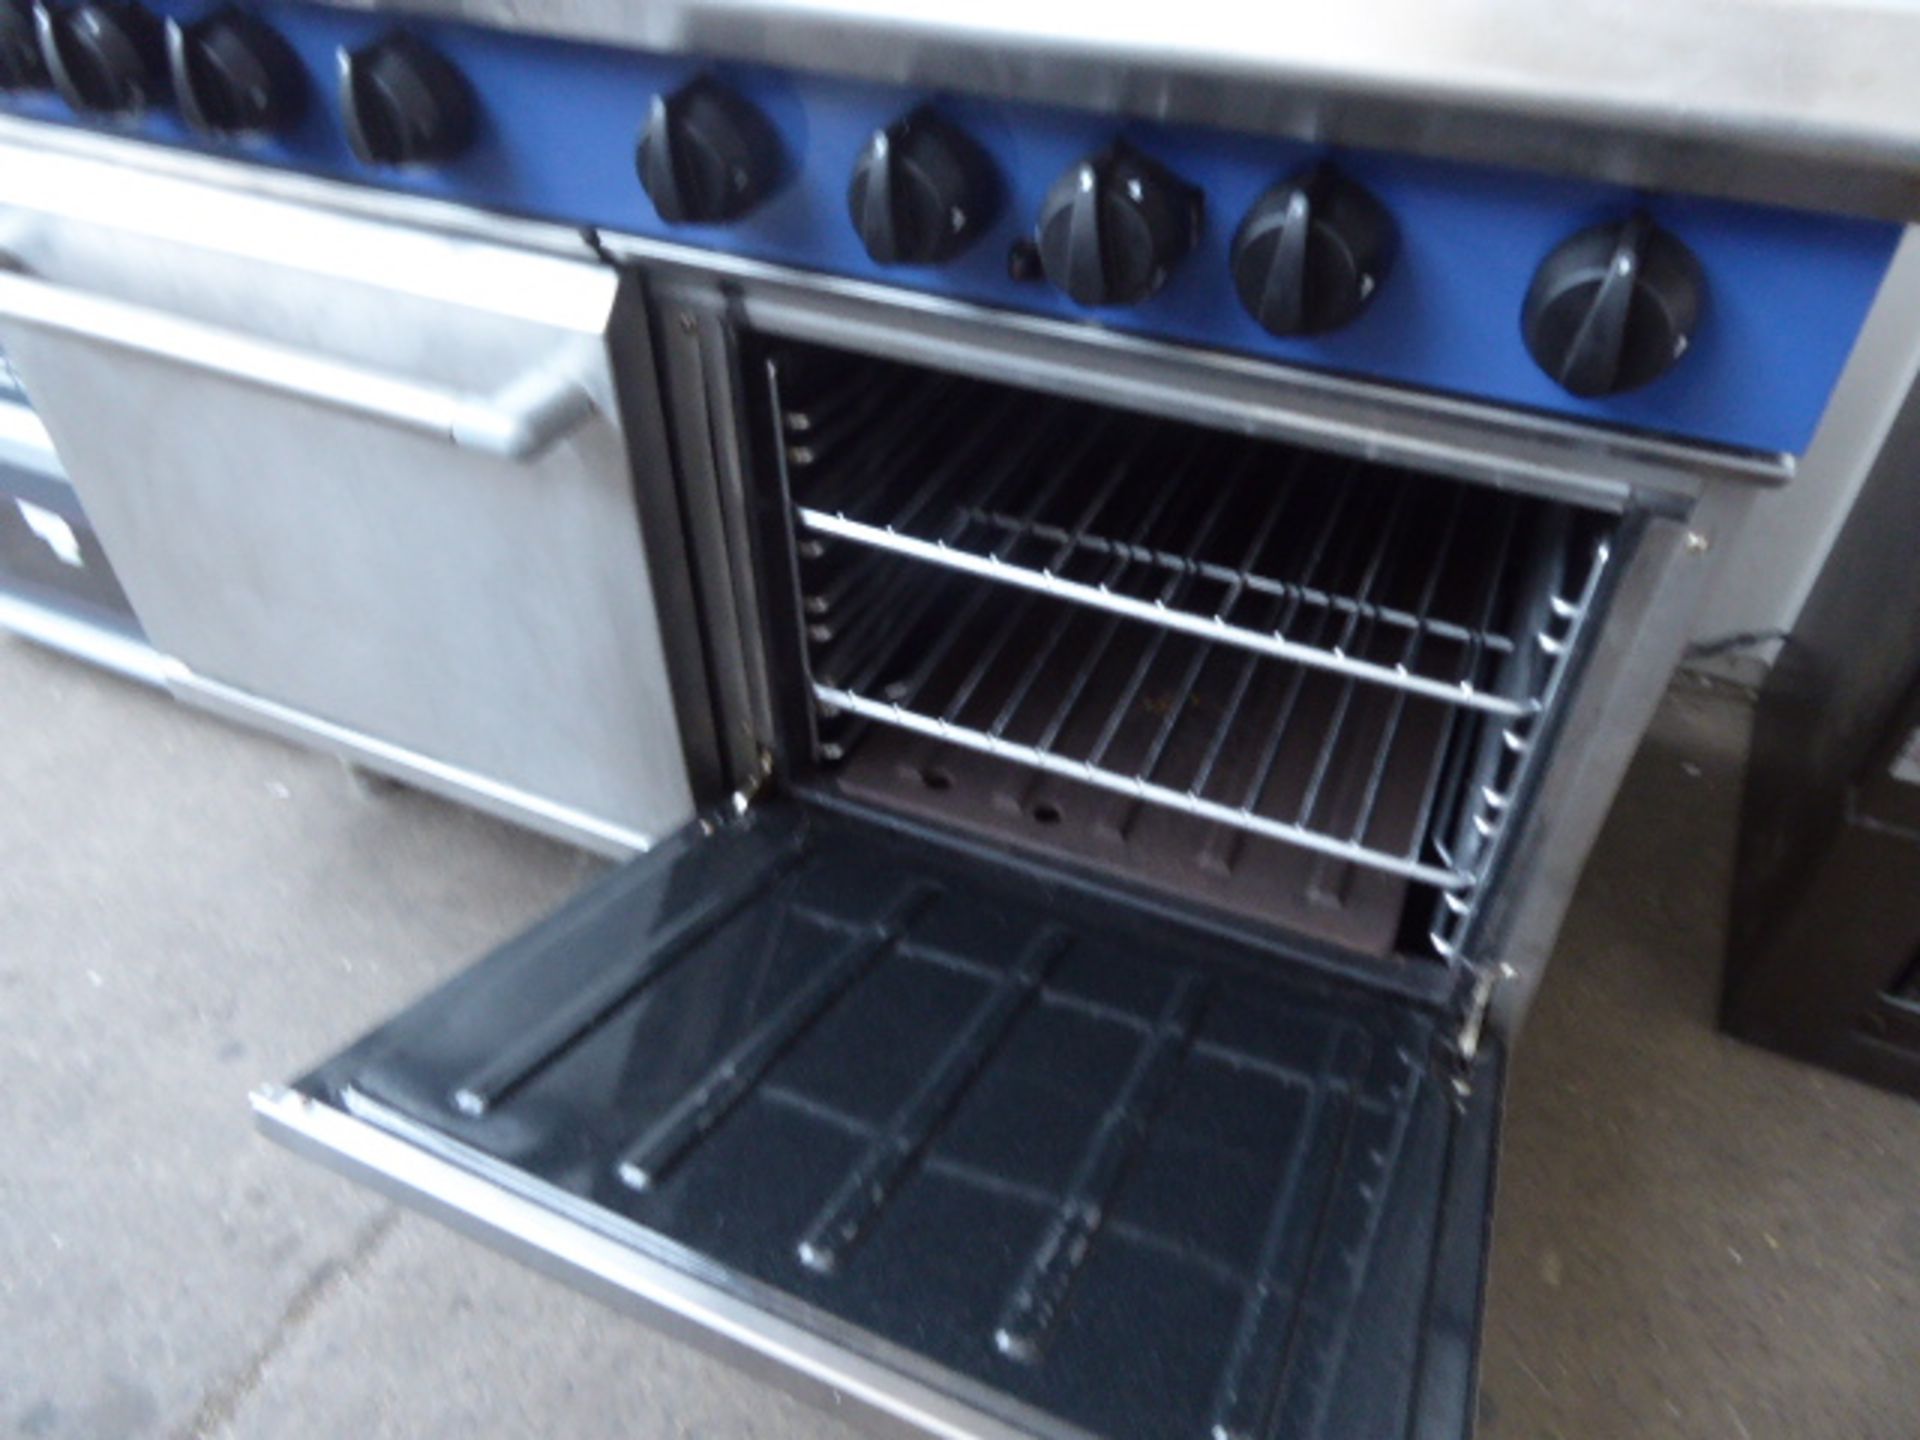 120cm gas Blue Seal 8 burner cooker with 2 single door ovens under - Image 4 of 4